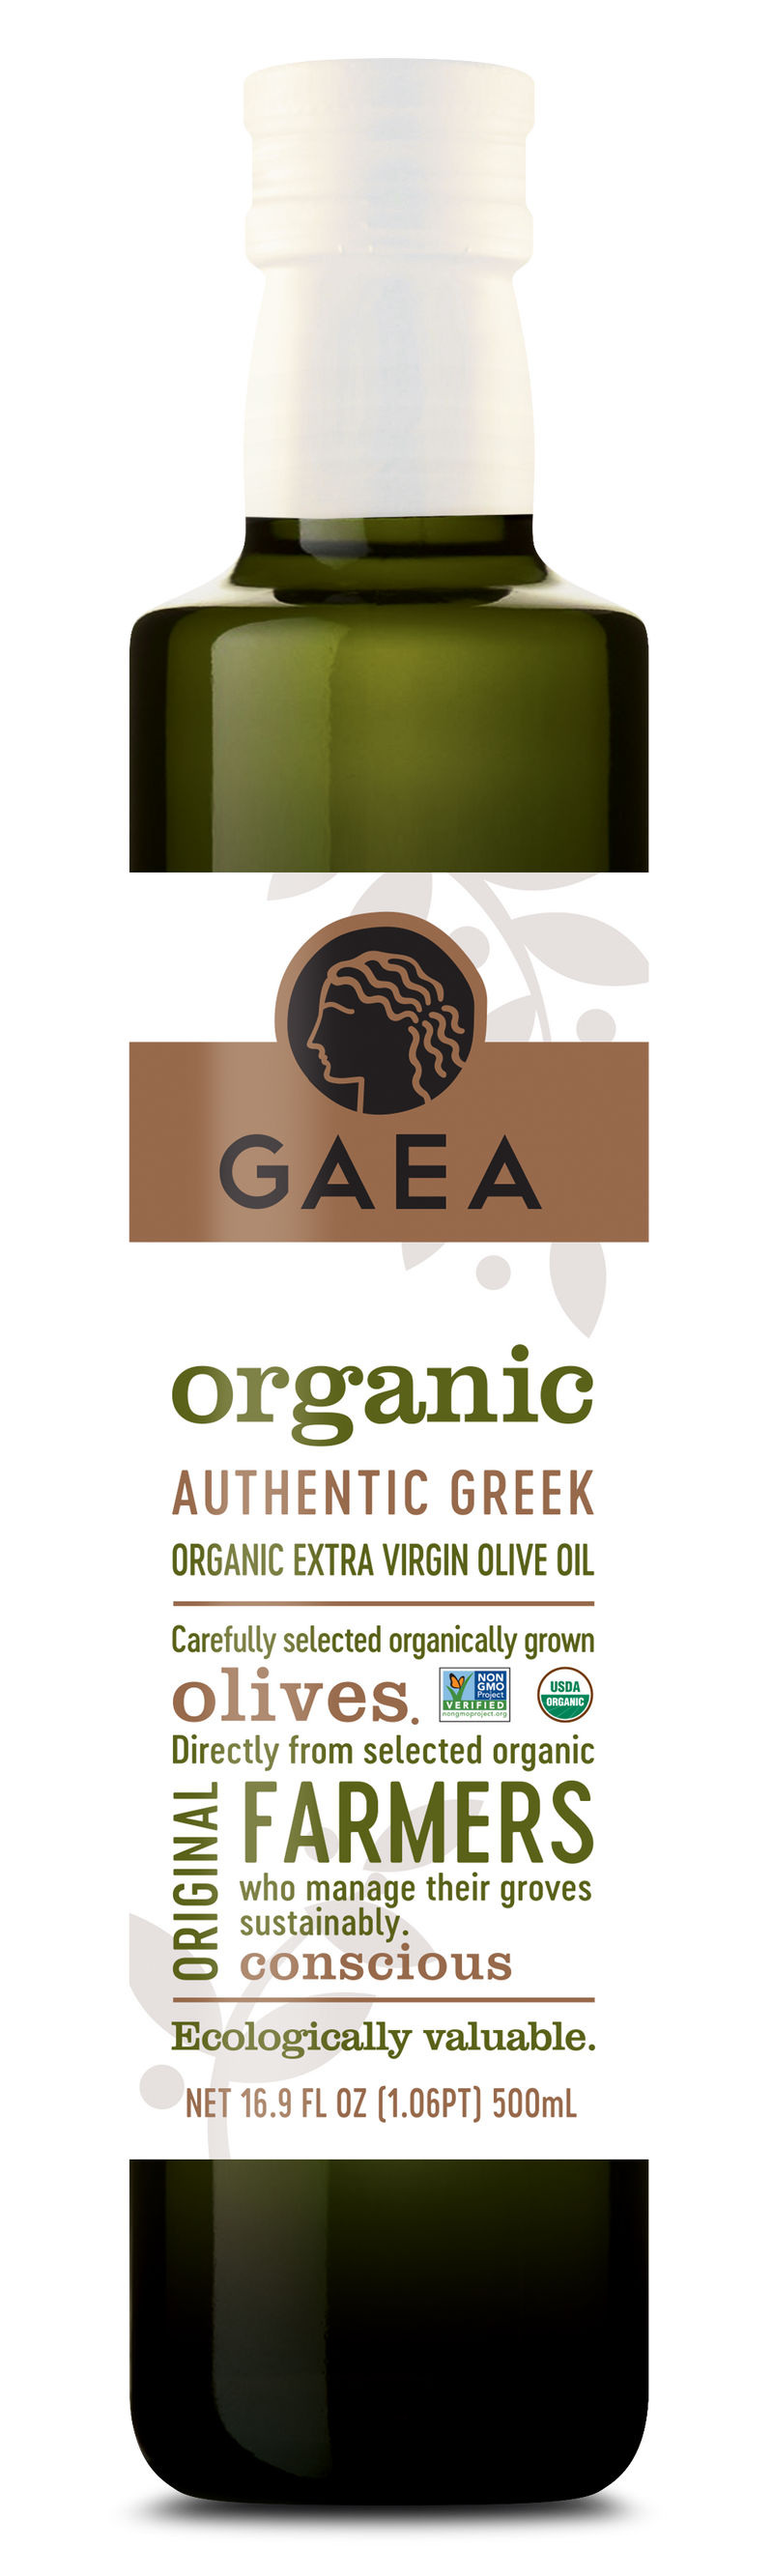 GAEA Organic Extra Virgin Olive oil 17 oz